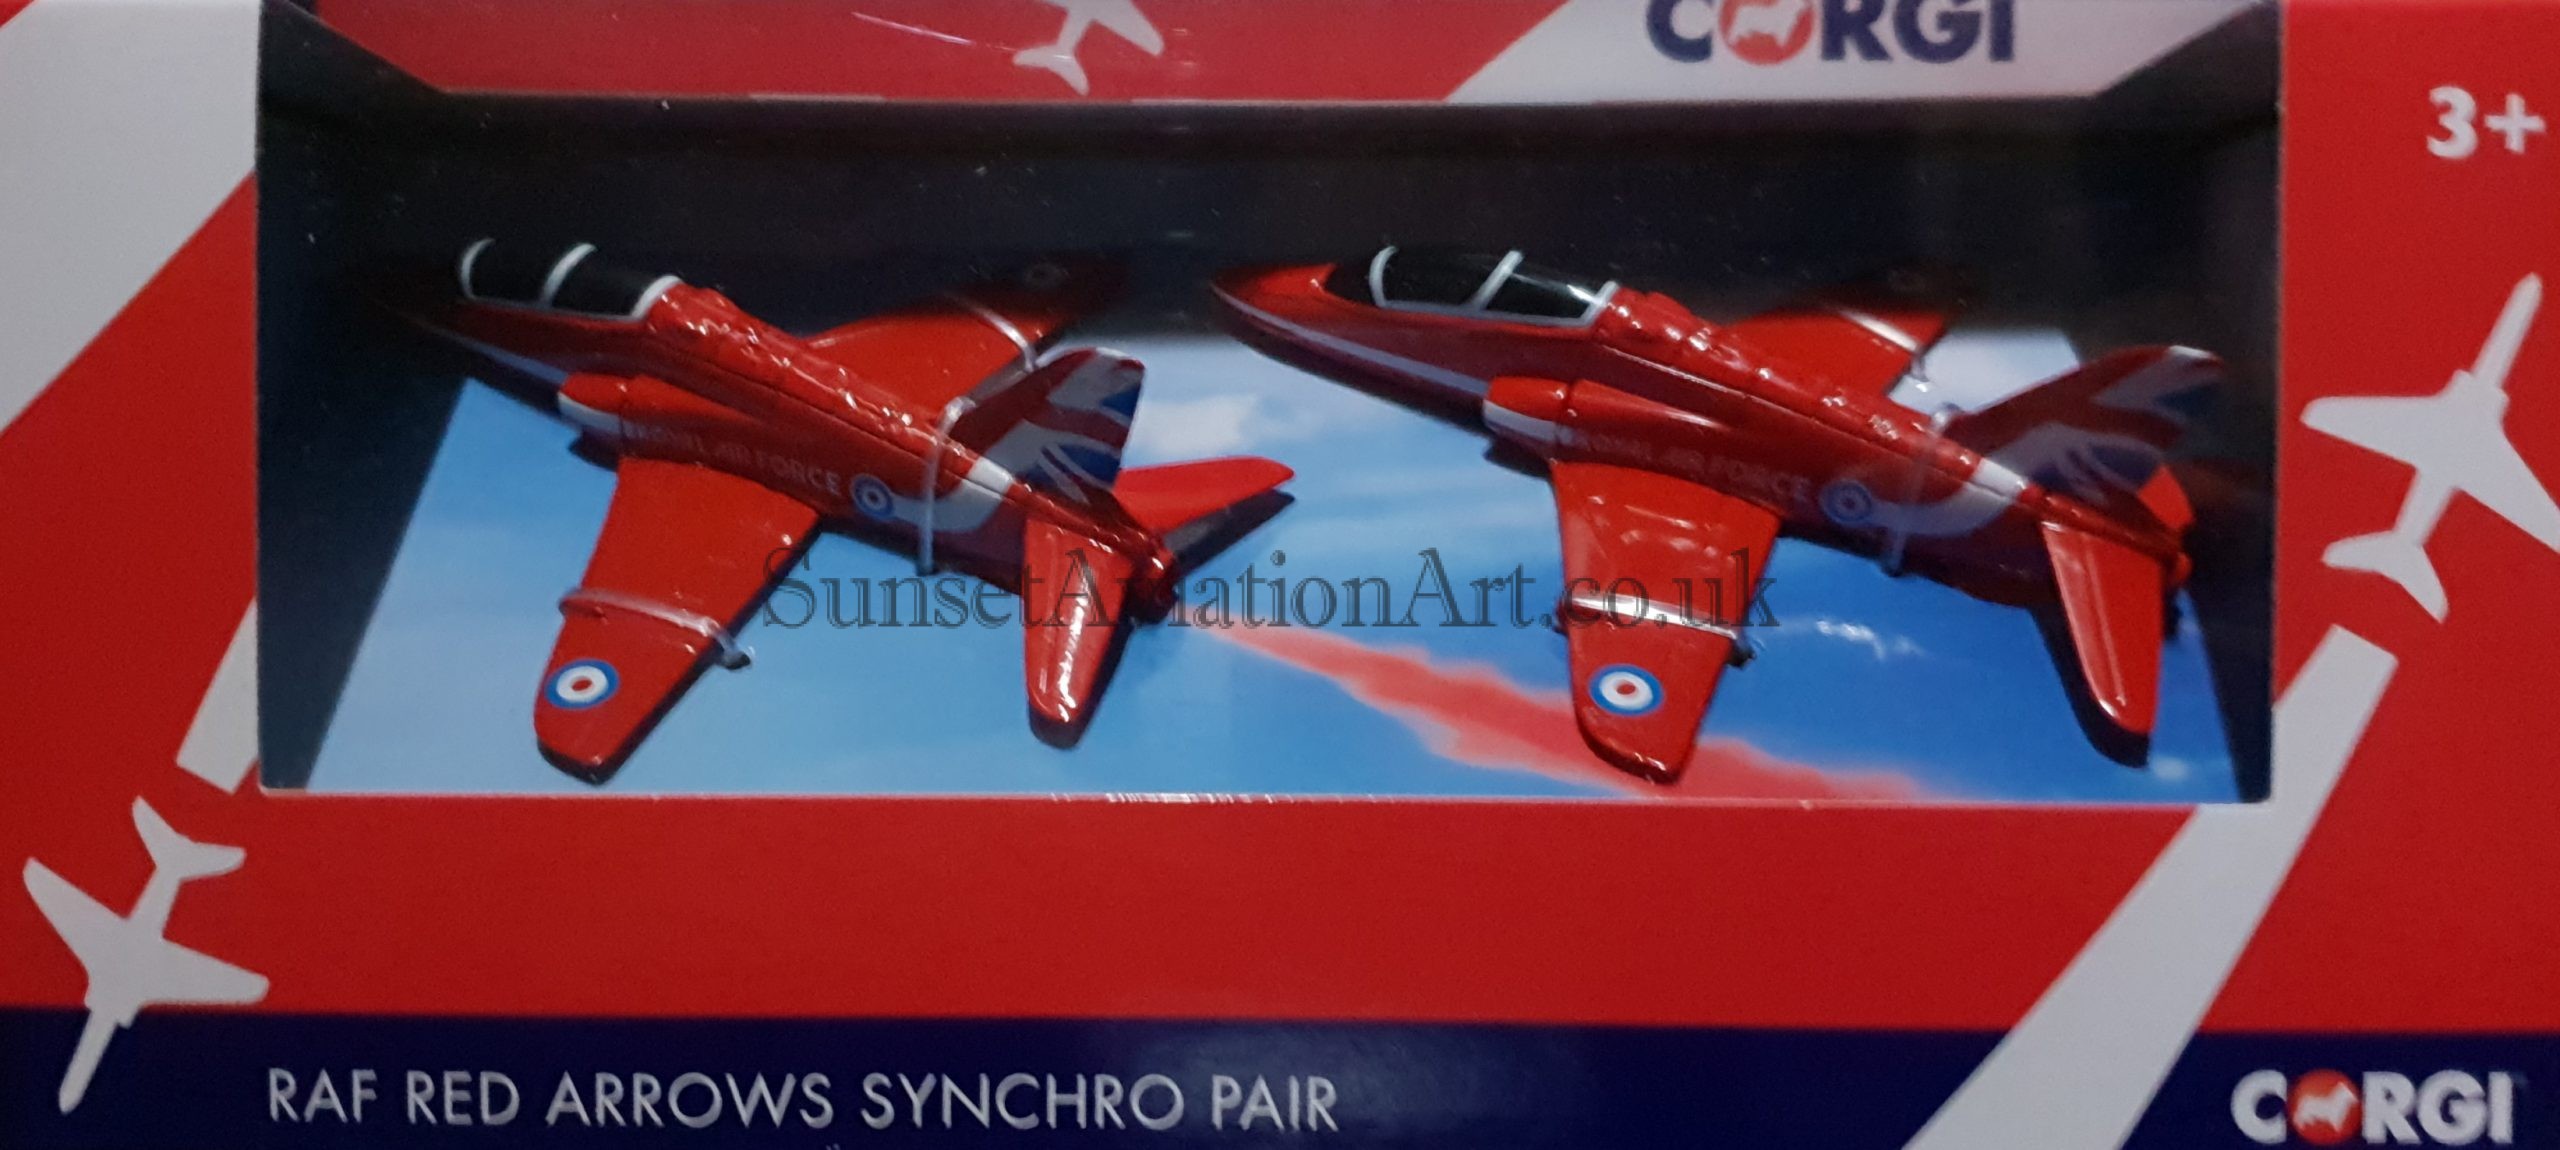 red arrow synchro pair corgi showcase CS90687